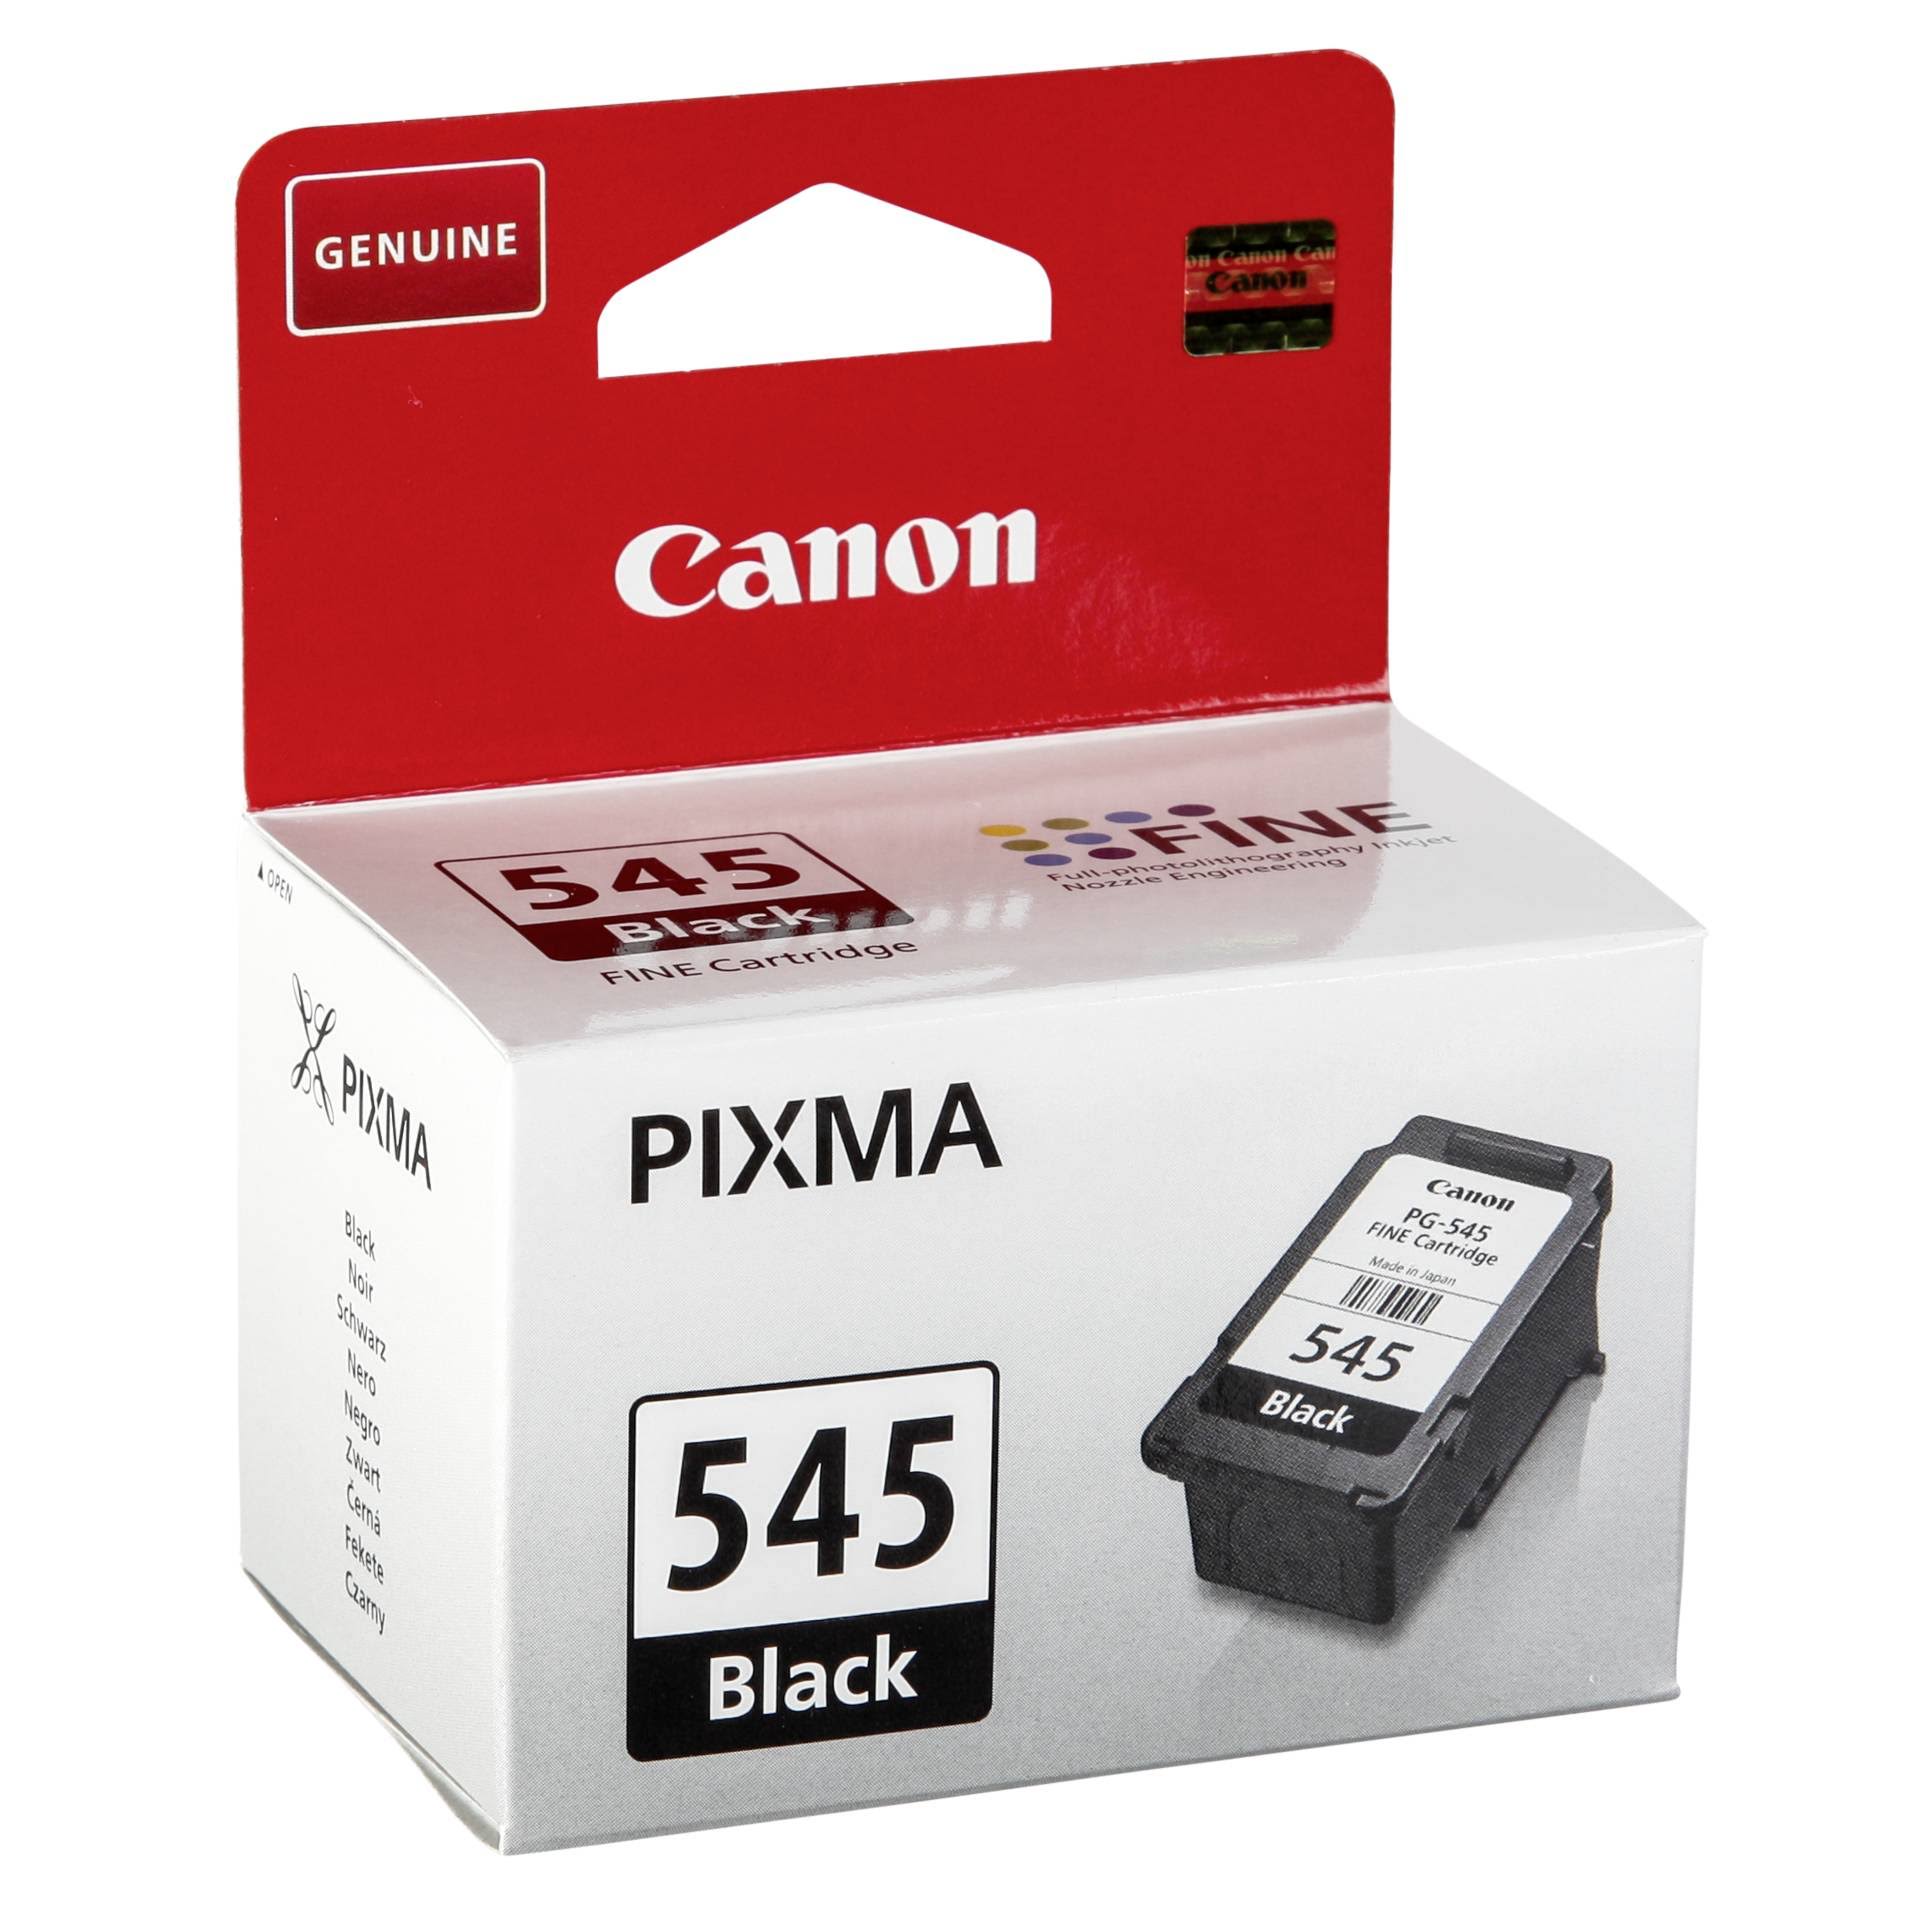 Canon Pixma BLK545 Ink Cartridge - Black